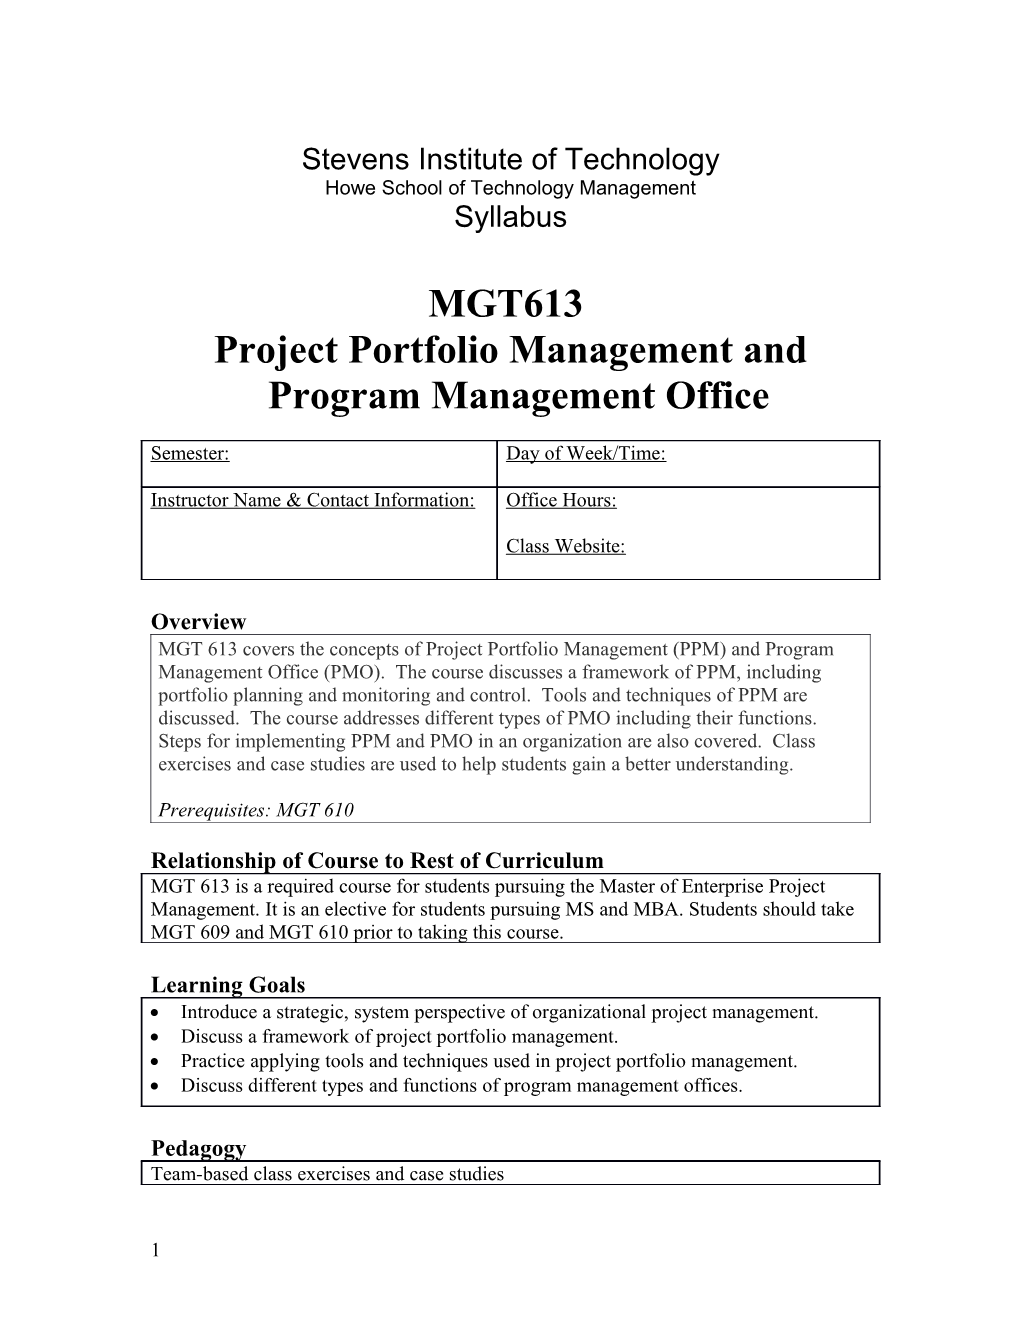 Project Portfolio Management and Program Management Office